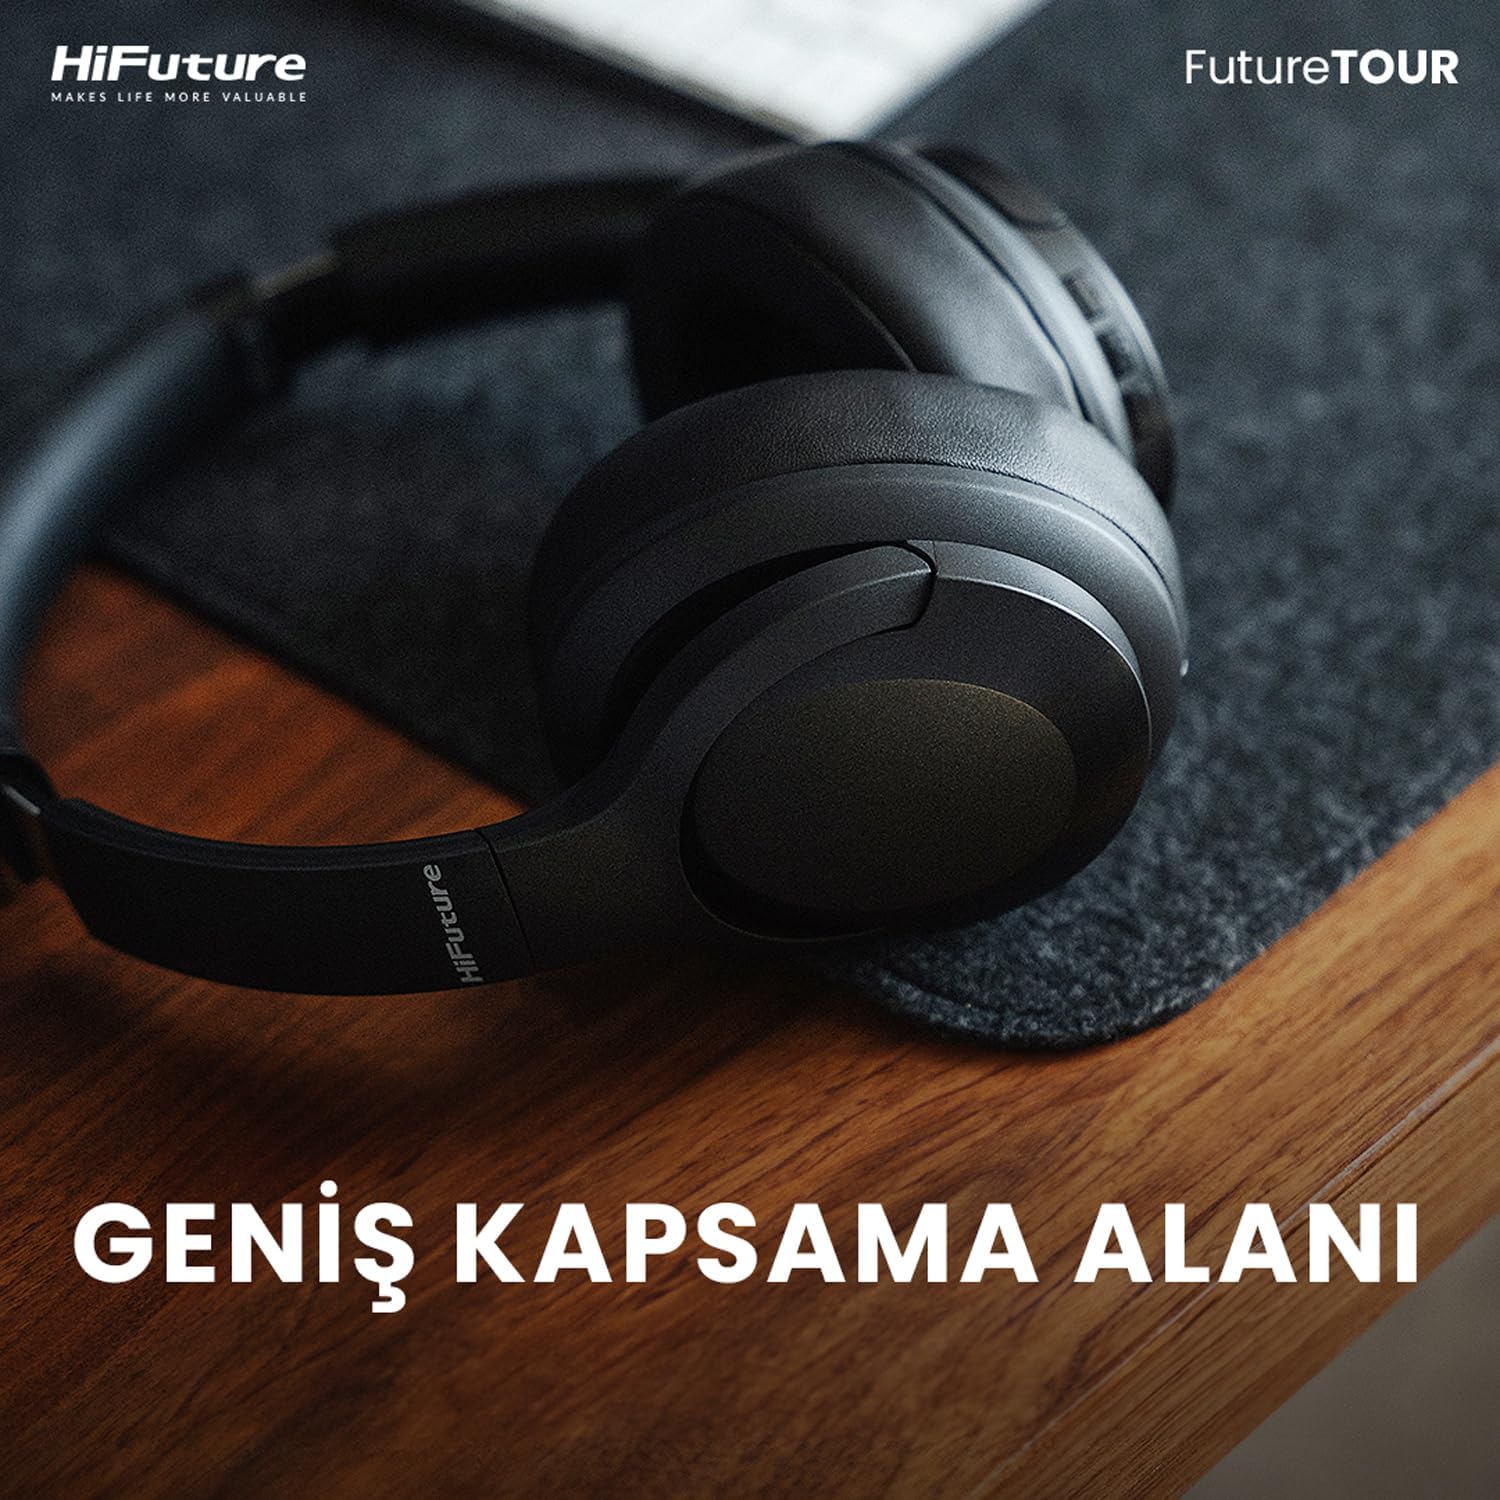 HiFuture FutureTour Over Ear ANC Headphones, Black, Wireless, One Size